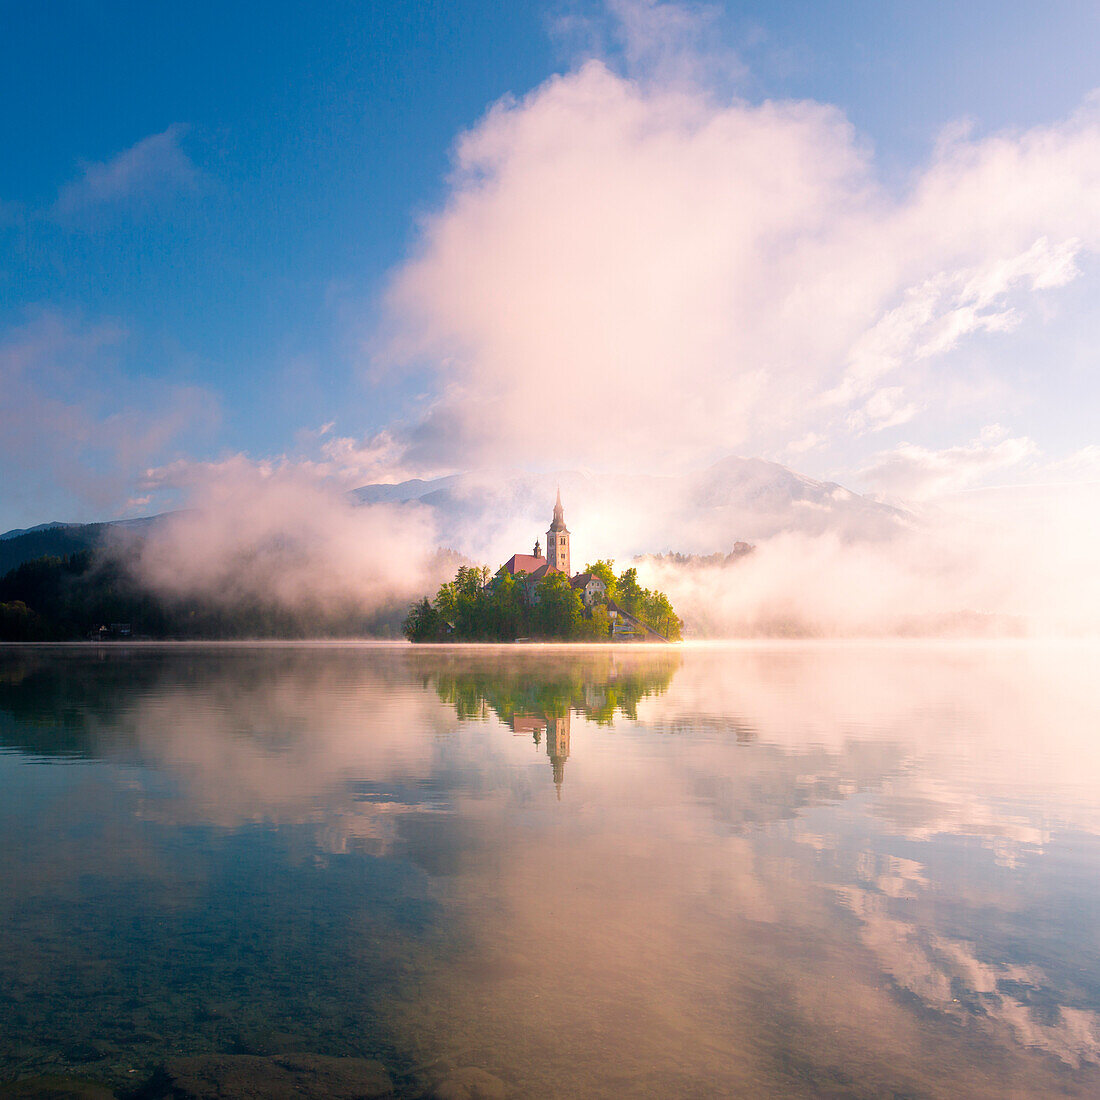 Bled Lake, Slovenia, A magic and unpredicted sunrise over the misty island